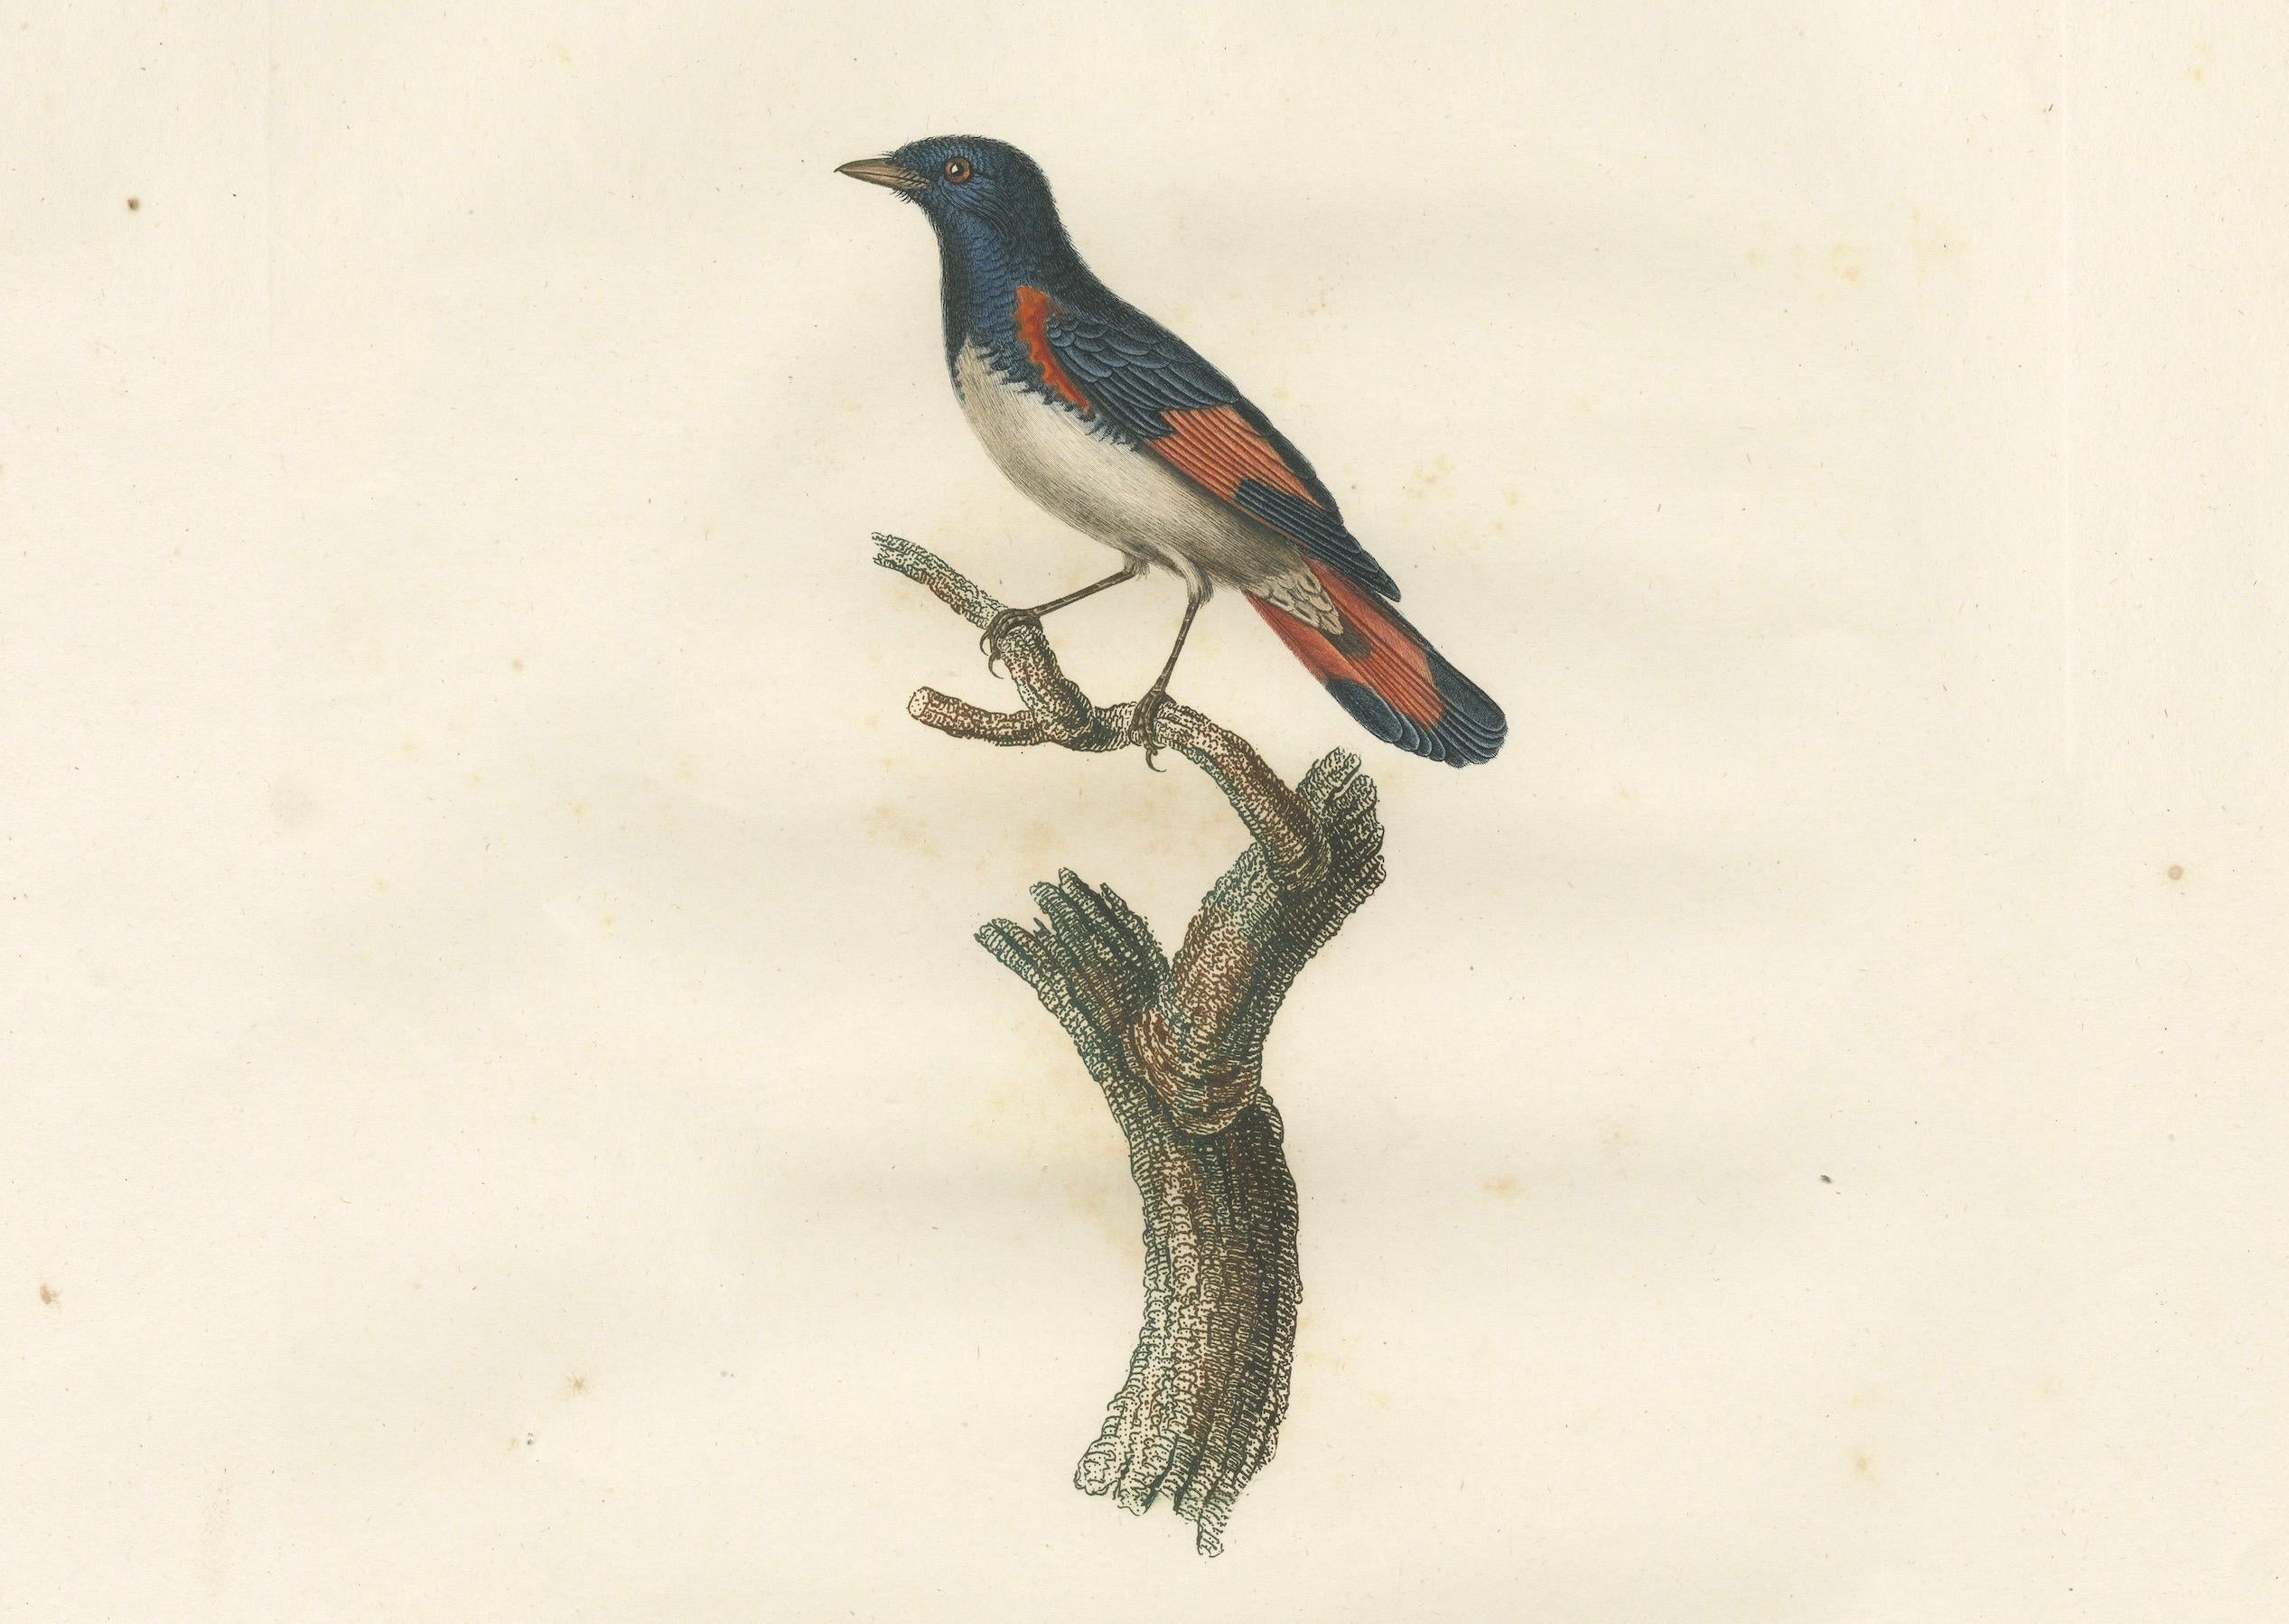 19th Century 1807 American Redstart Illustration - 'Le Moucherolle doré mâle' Old Bird Print For Sale